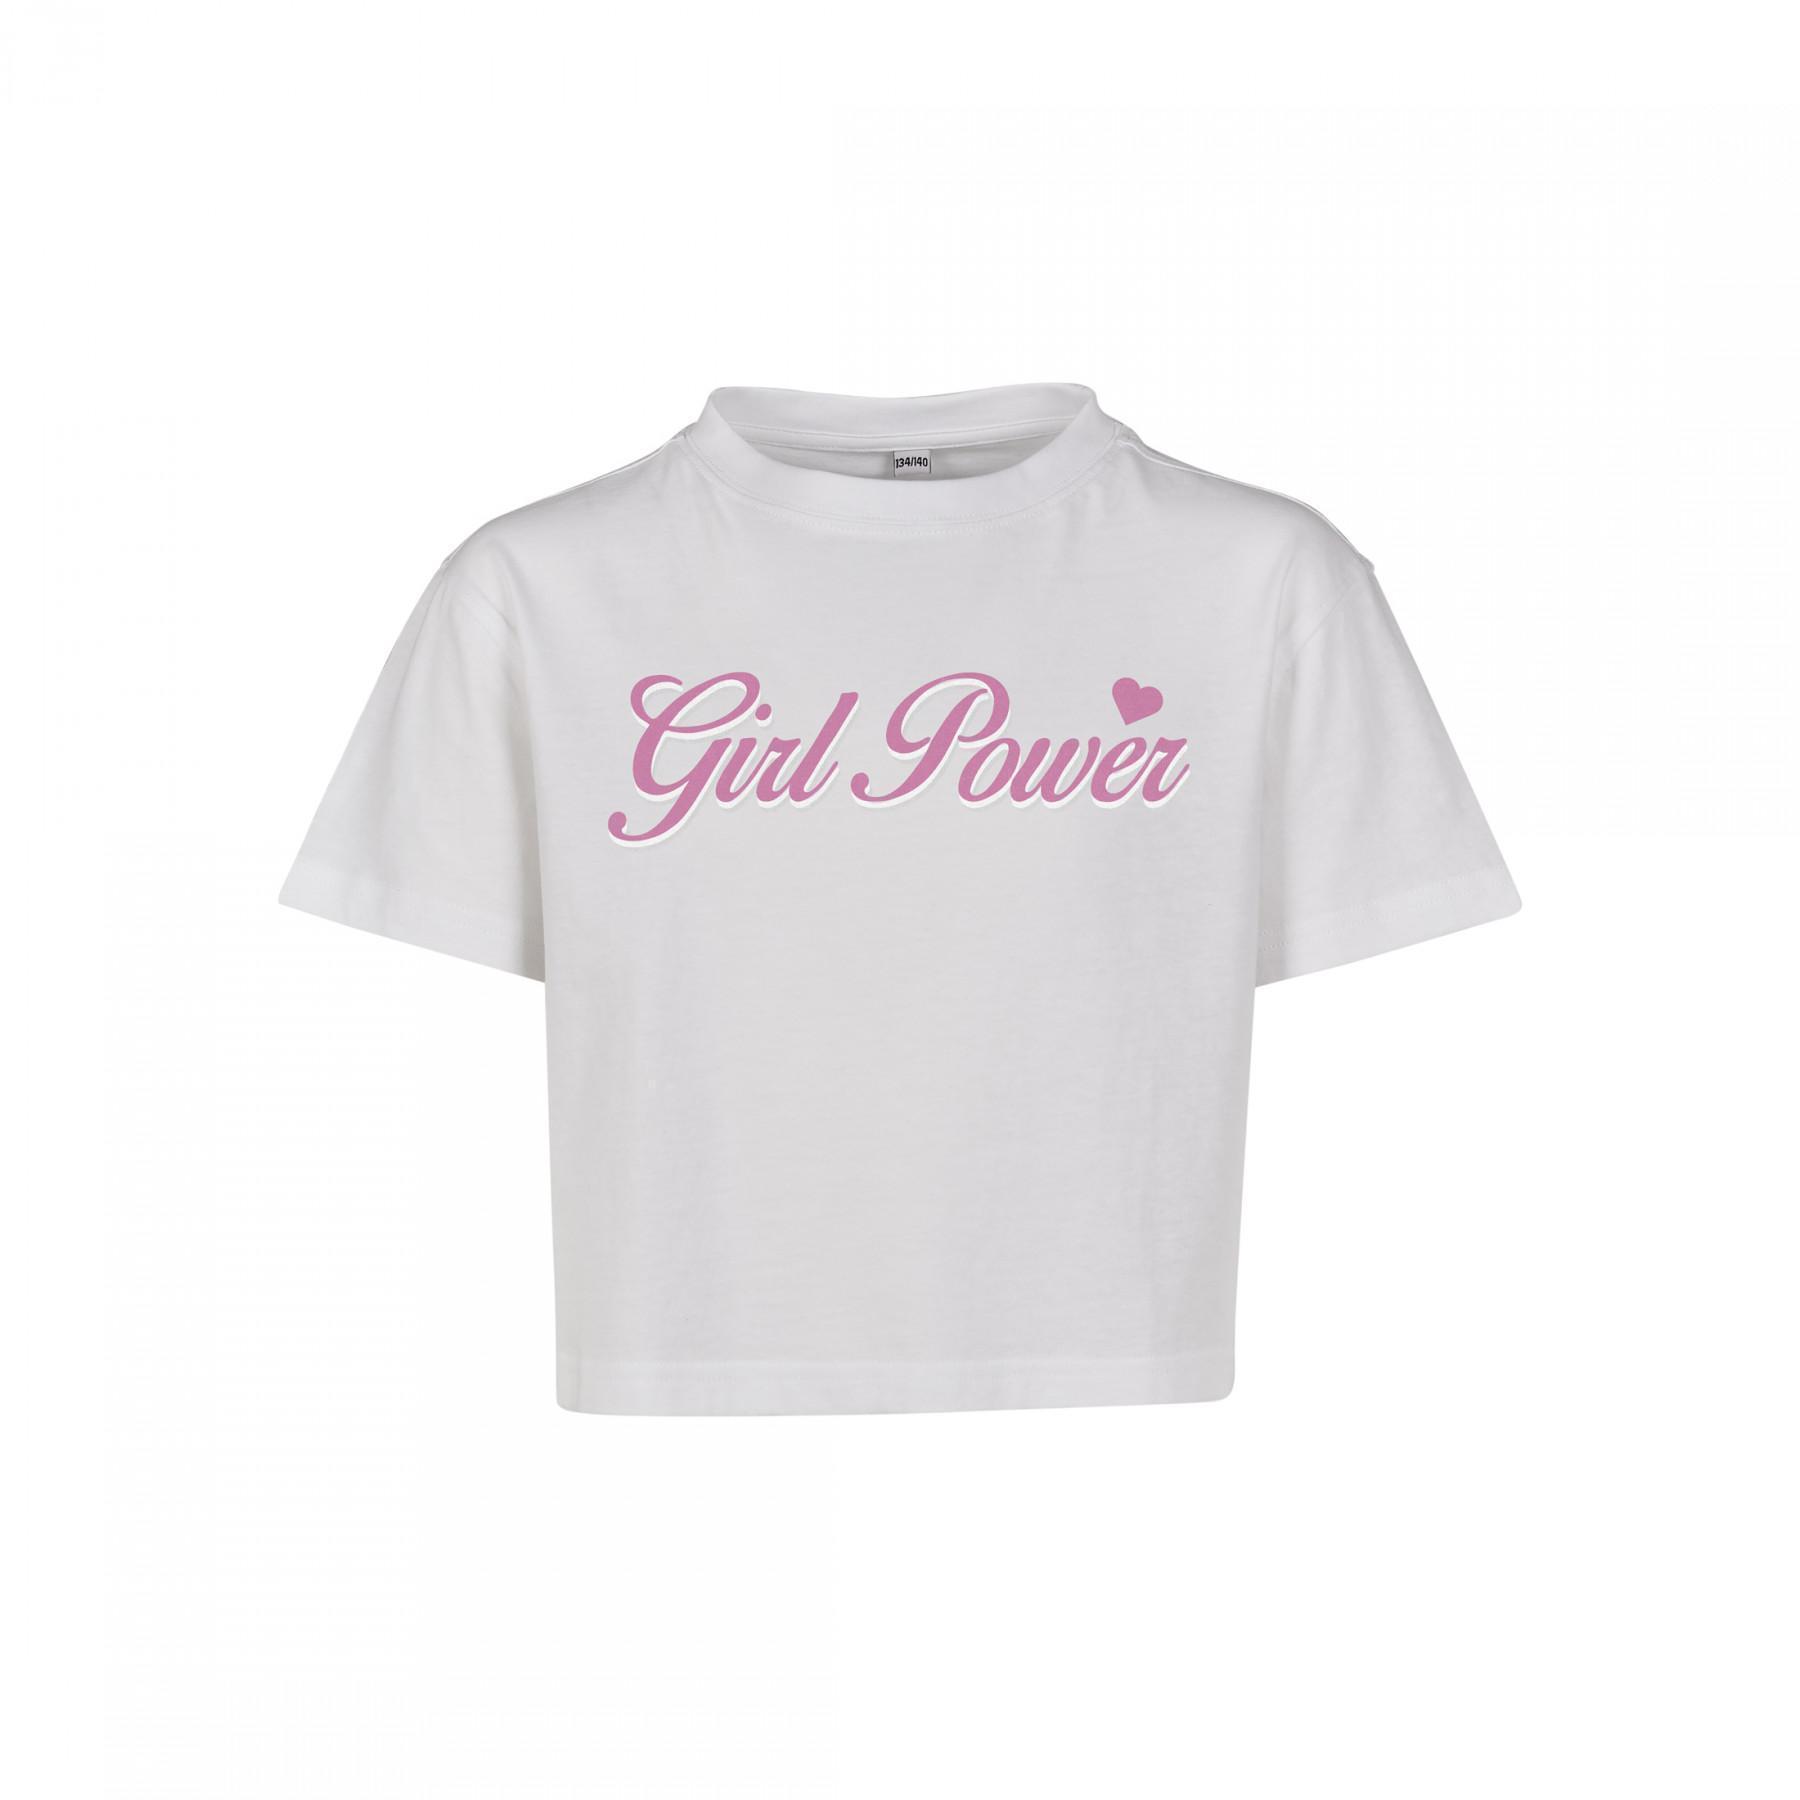 miter girl power t-shirt